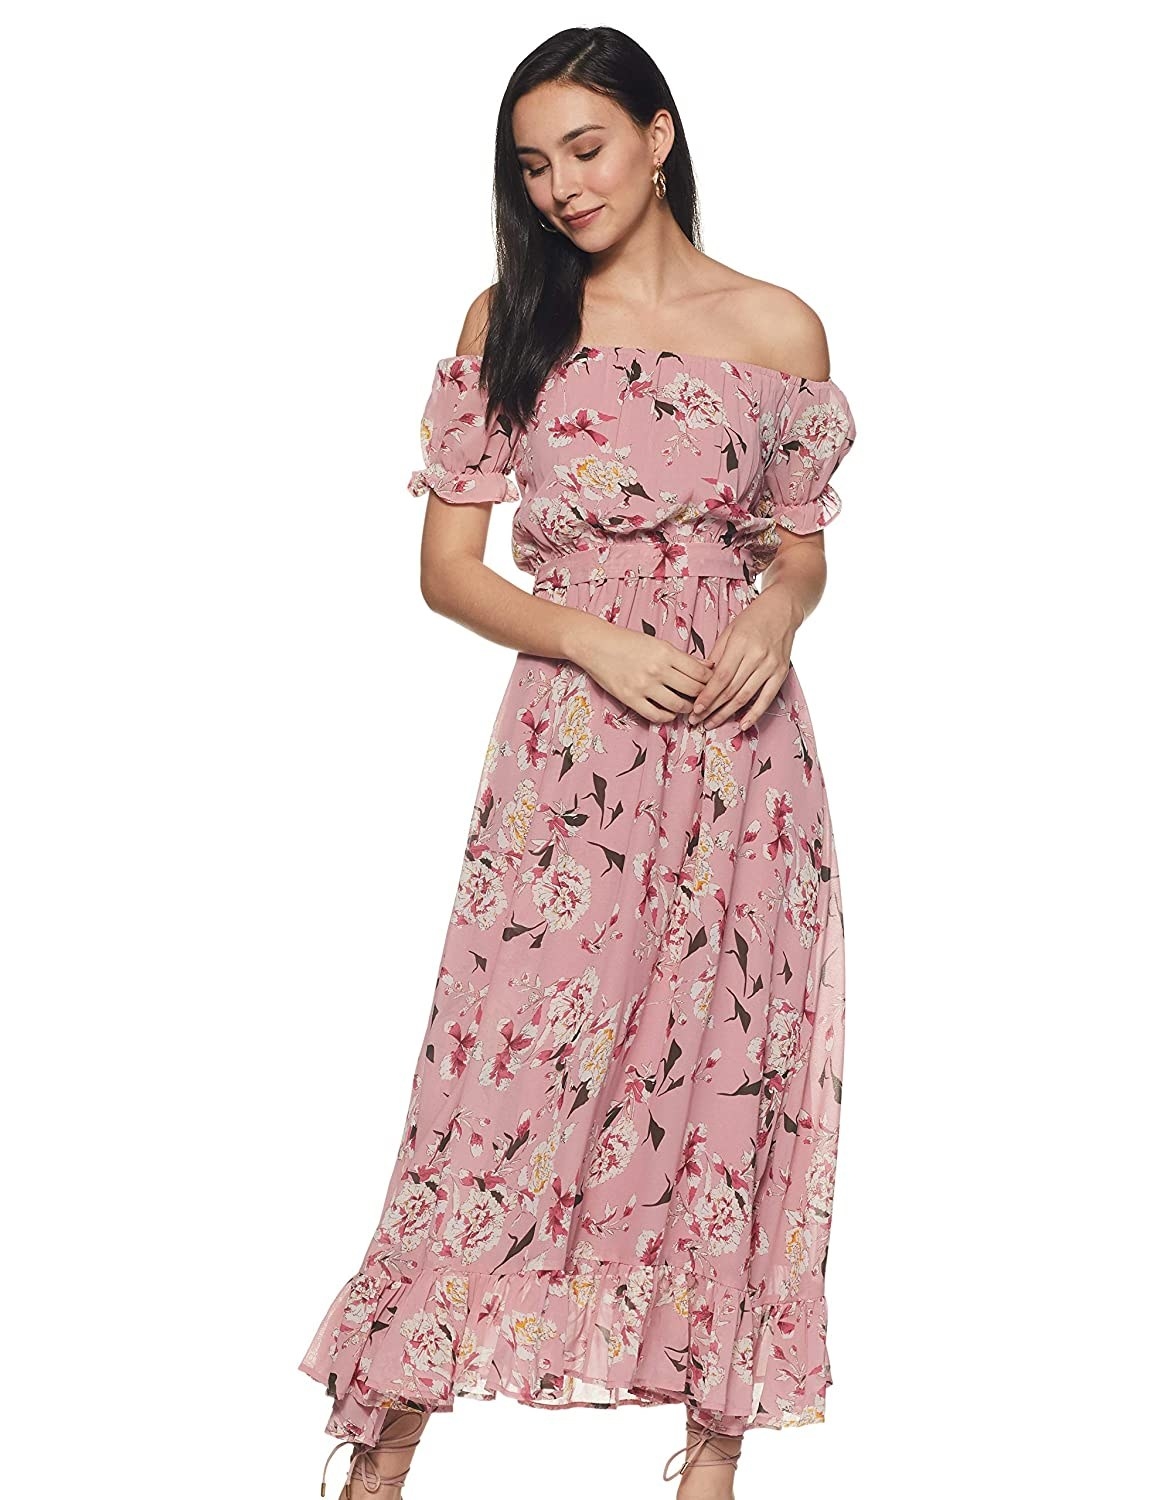 A woman wearing a floral dress 